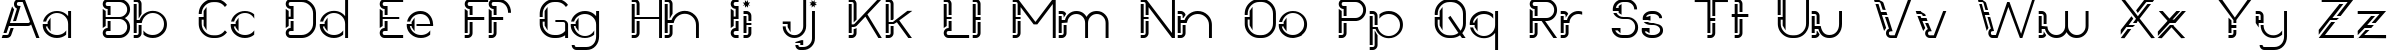 Пример написания английского алфавита шрифтом Future Sallow